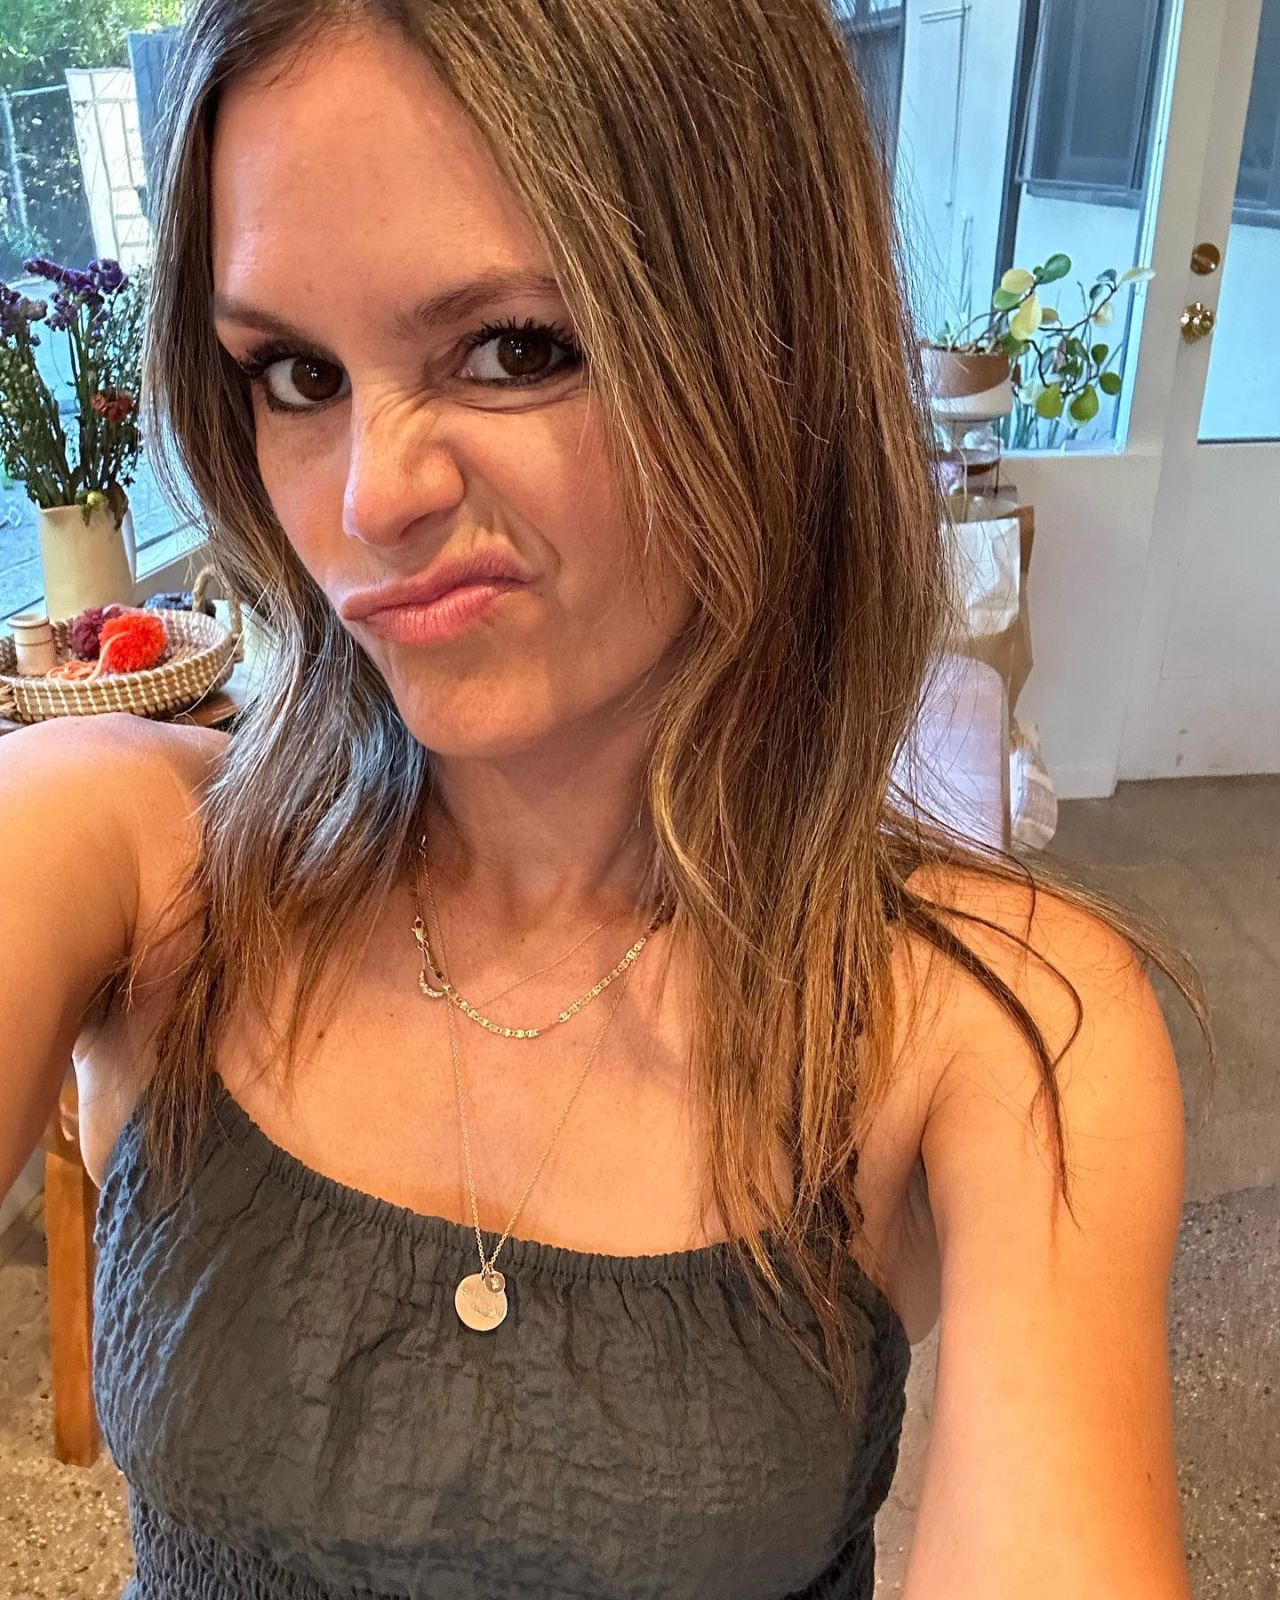 Cute and Sexy Rachel Bilson Selfie, What a Hottie!